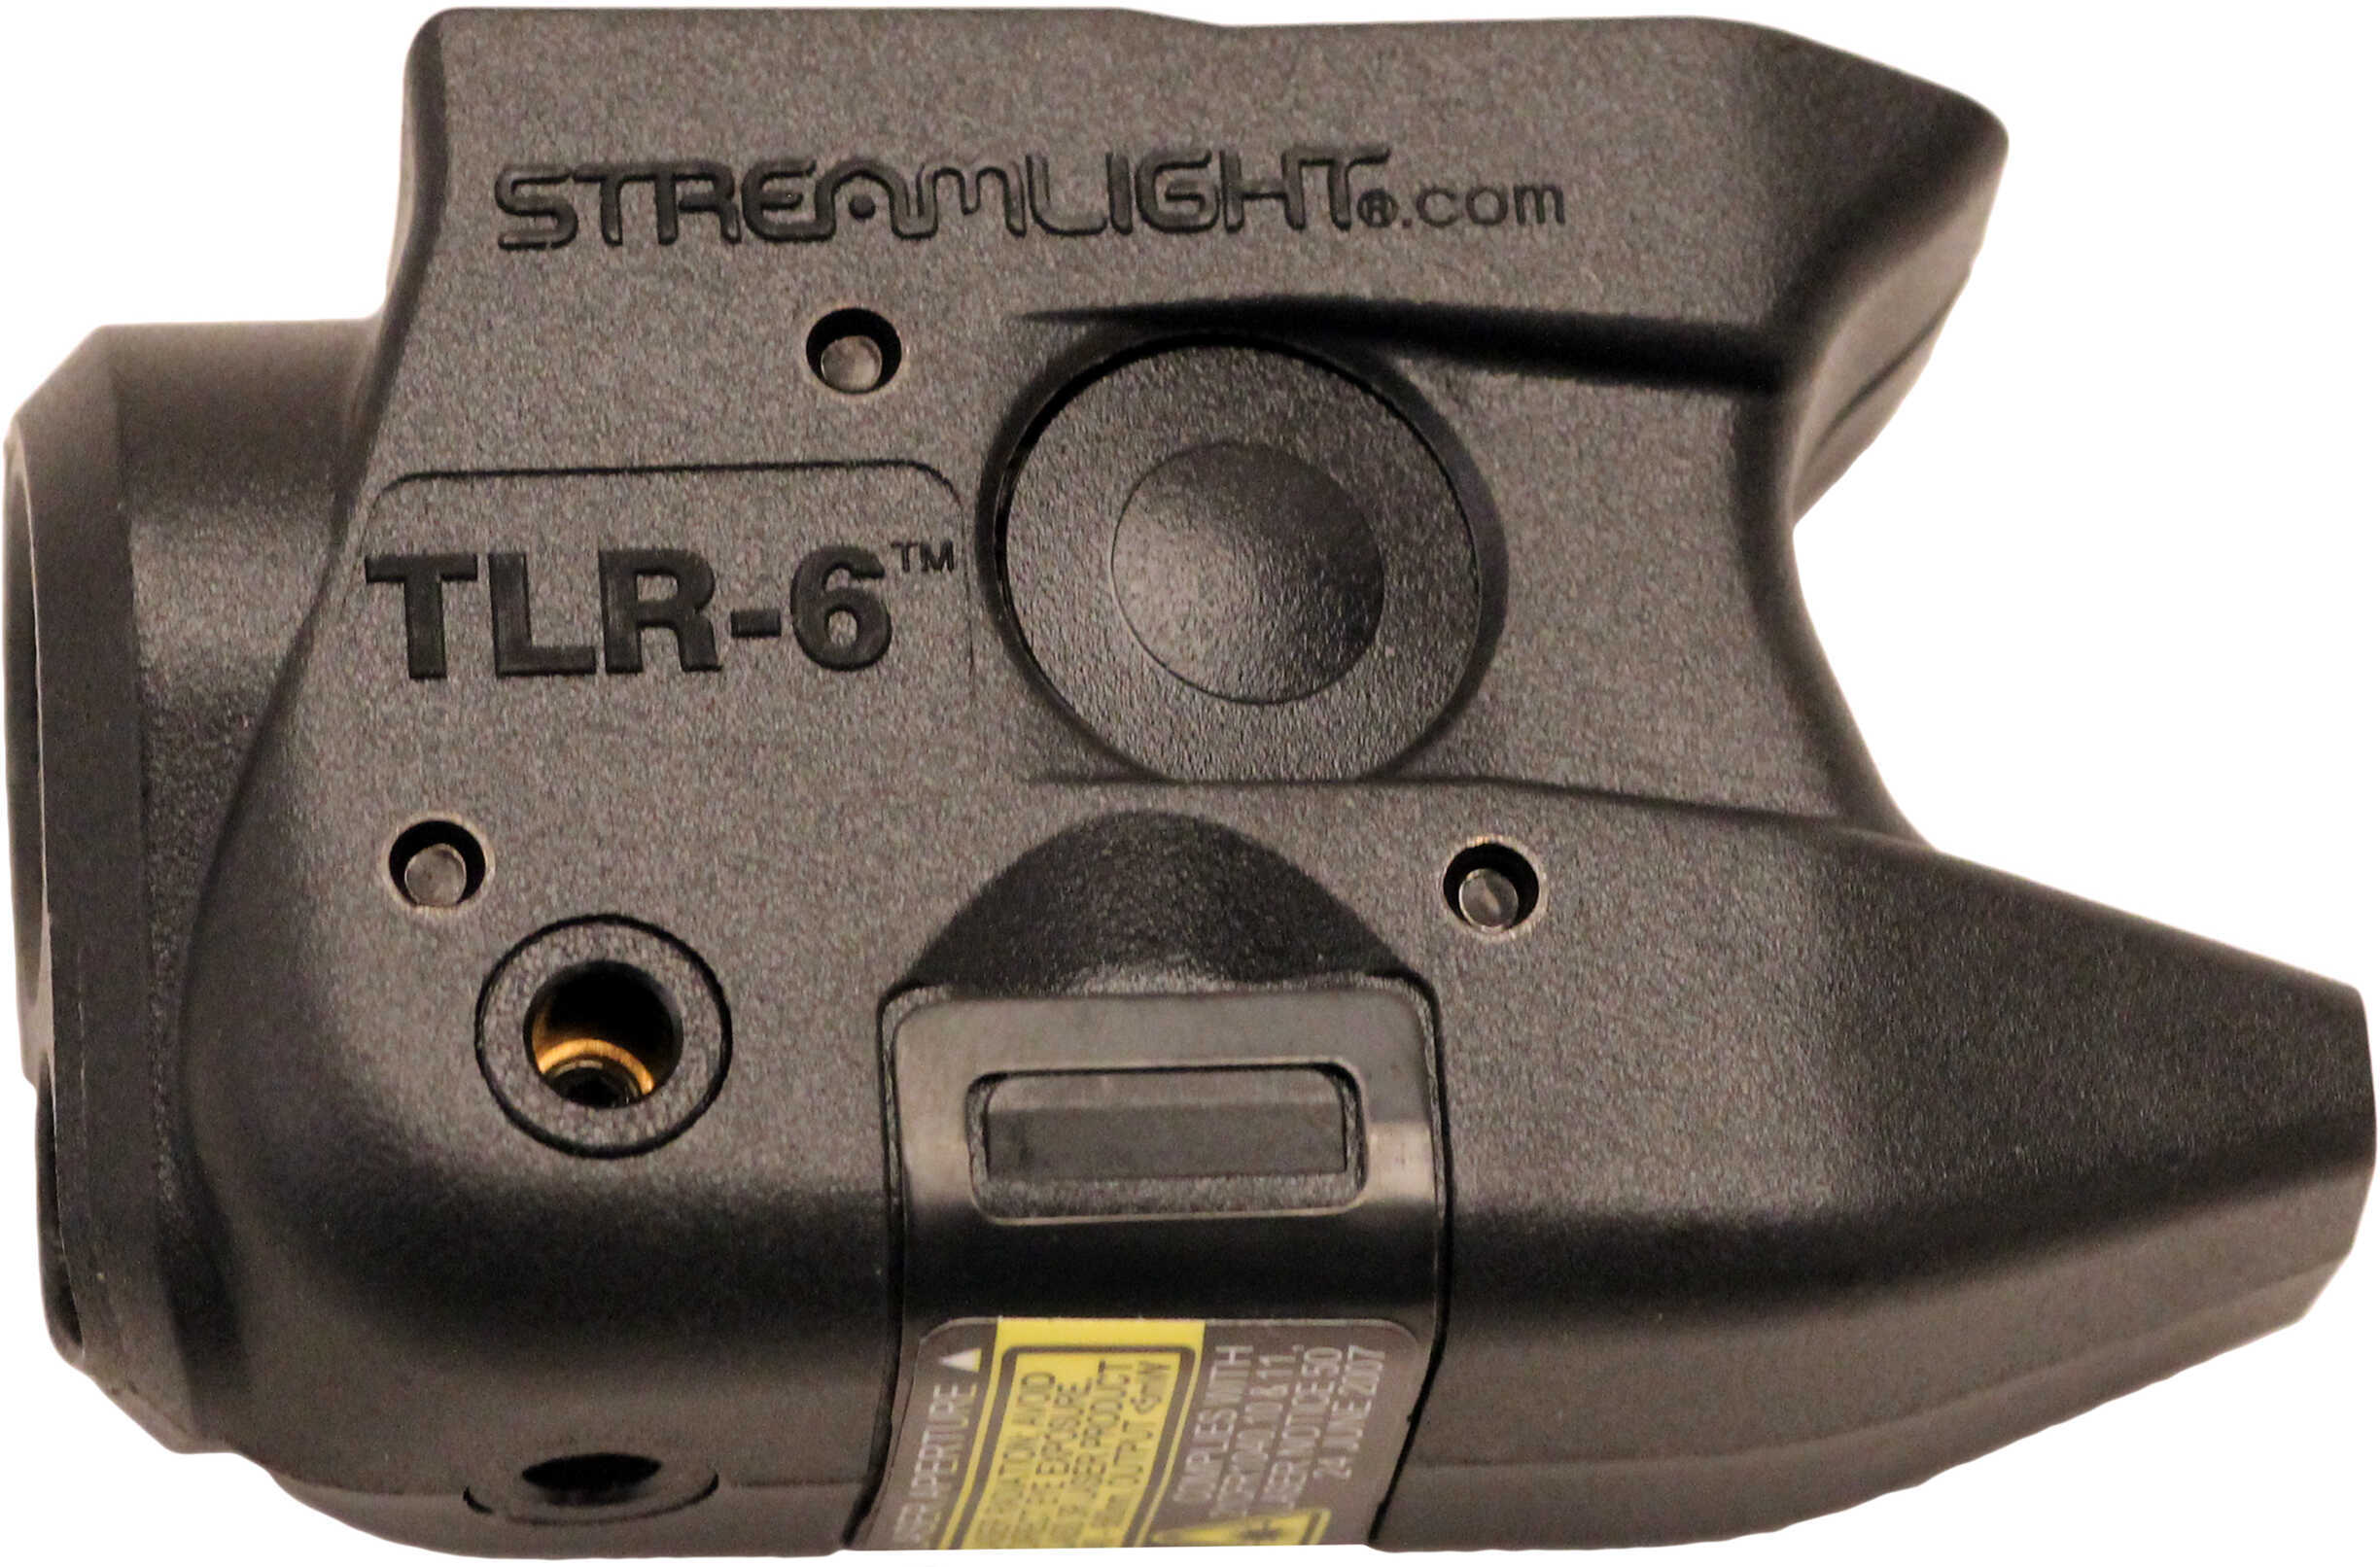 Streamlight TLR-6 Tactical Light For Kahr Md: 69274